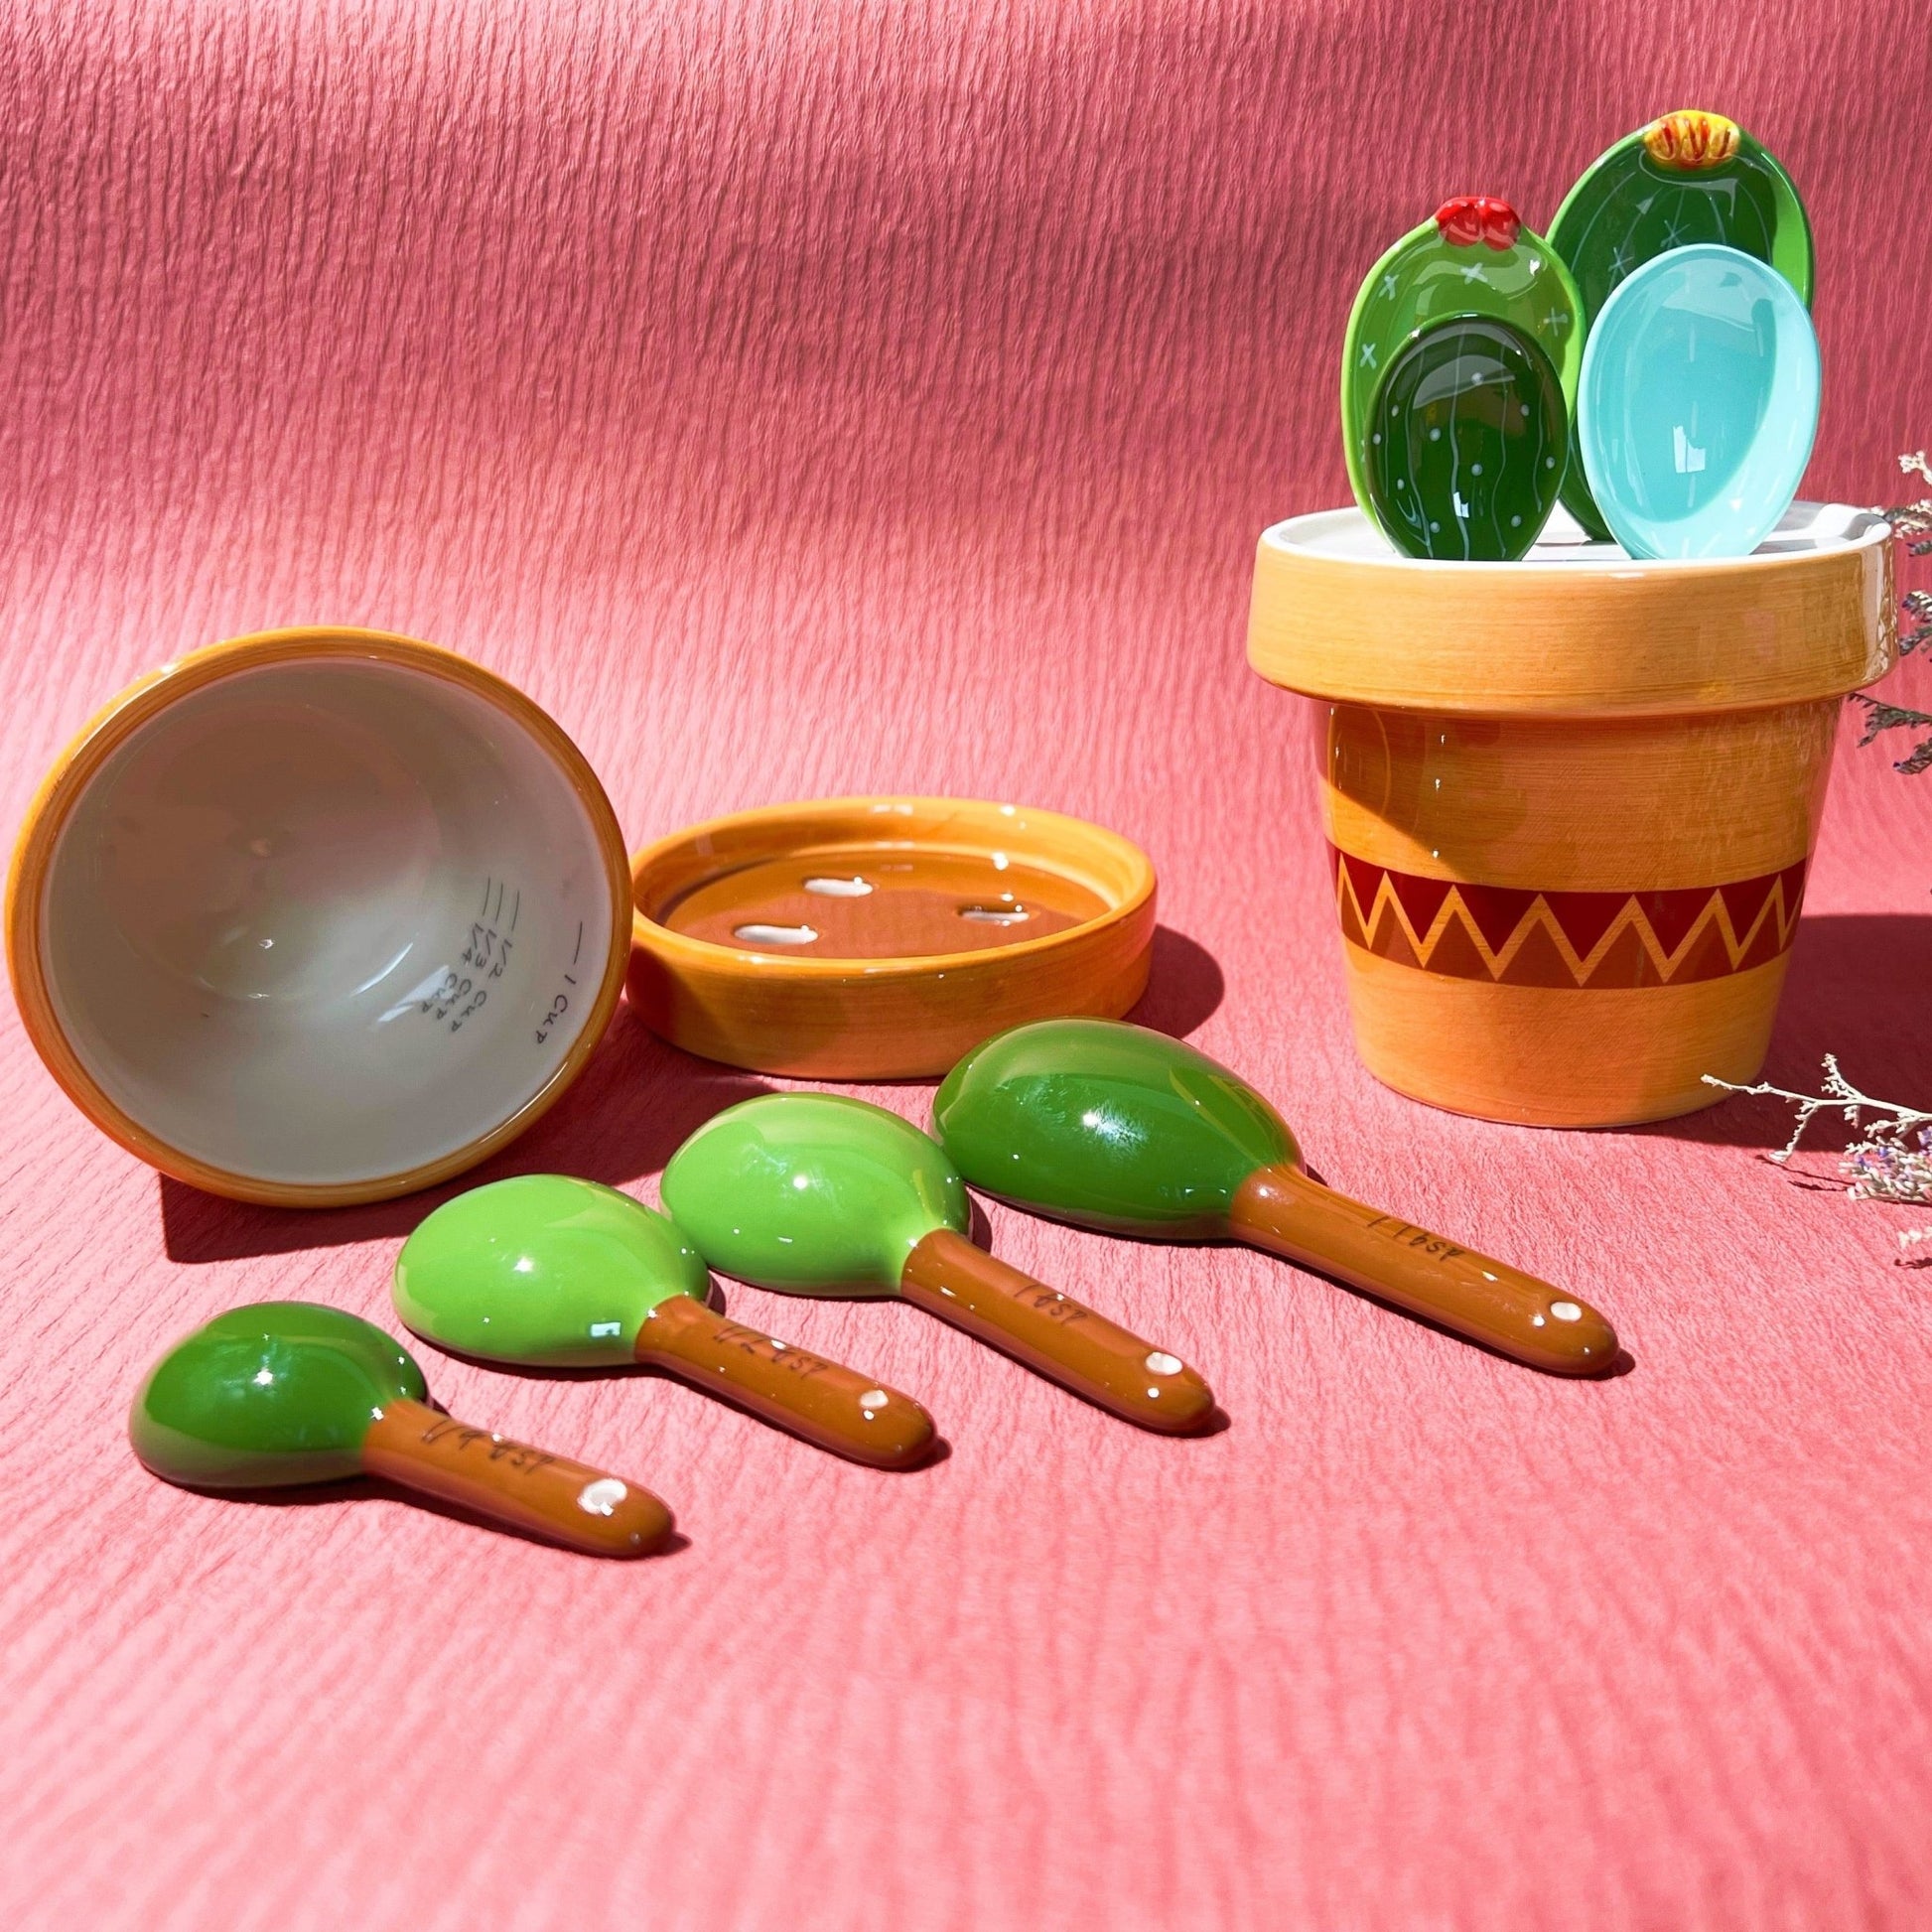 Ceramic Cactus Measuring Spoons set and Cups, Cute Measuring